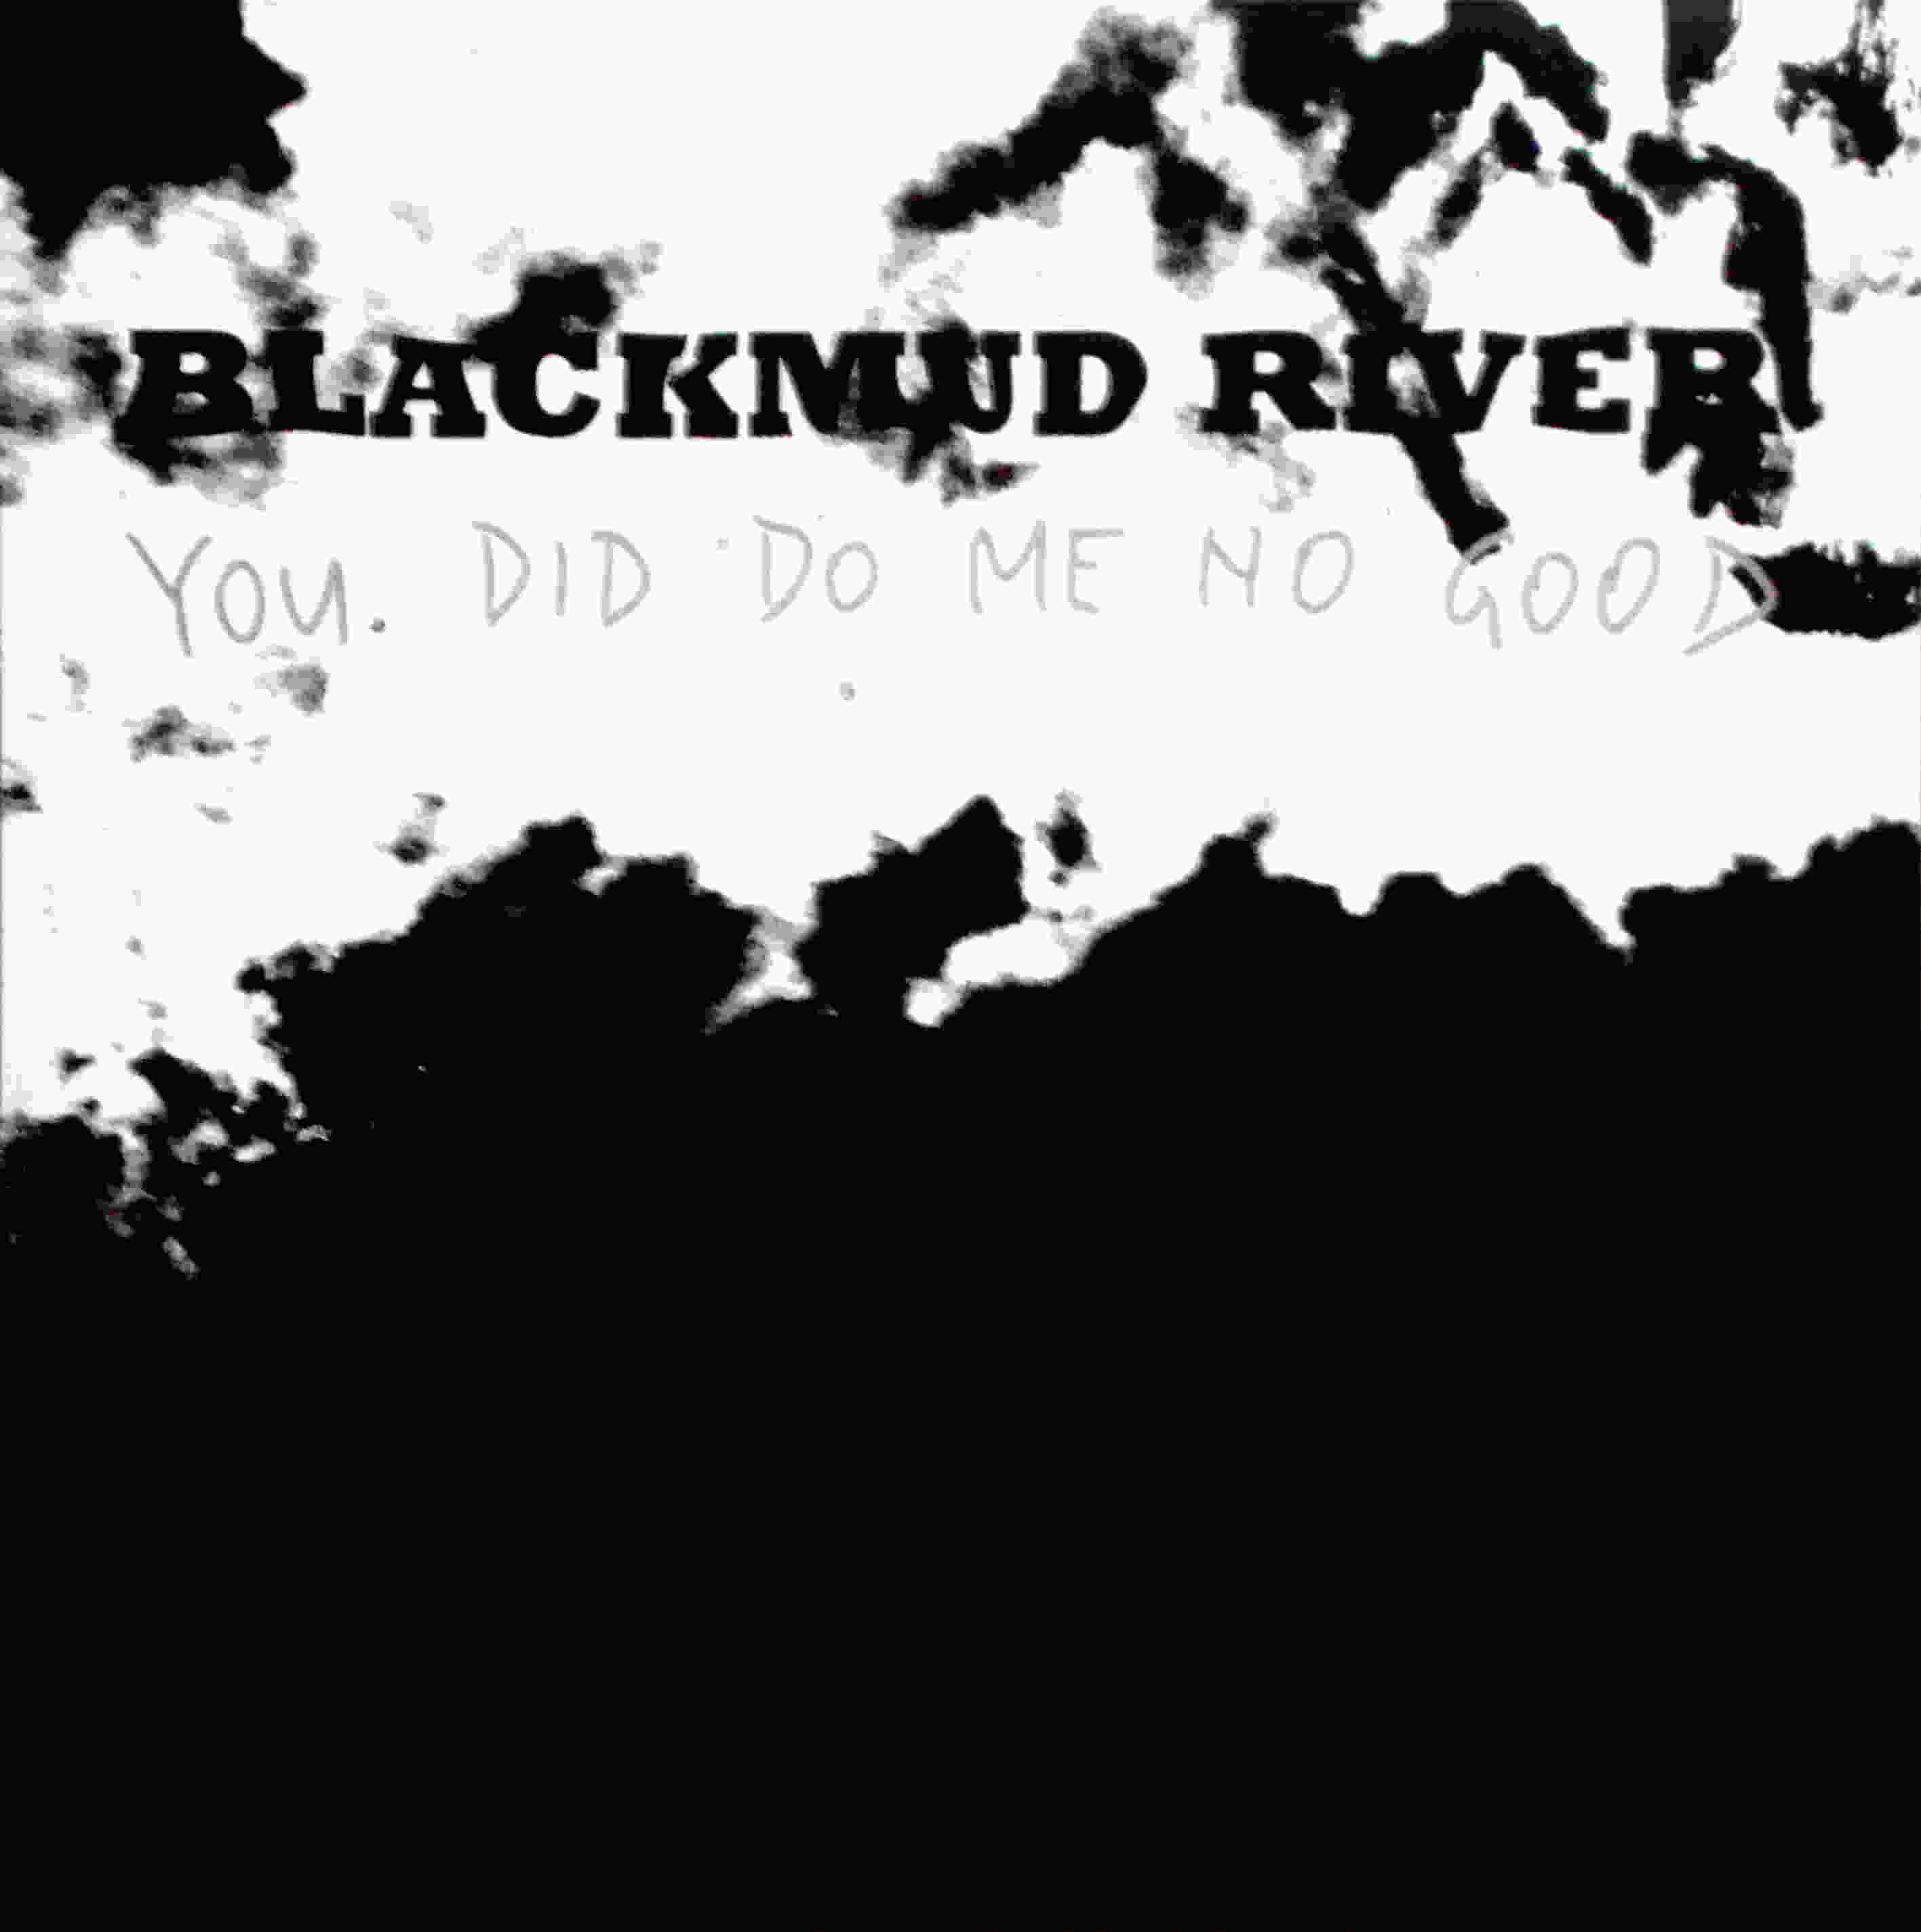 blackmud river - you did do me no good